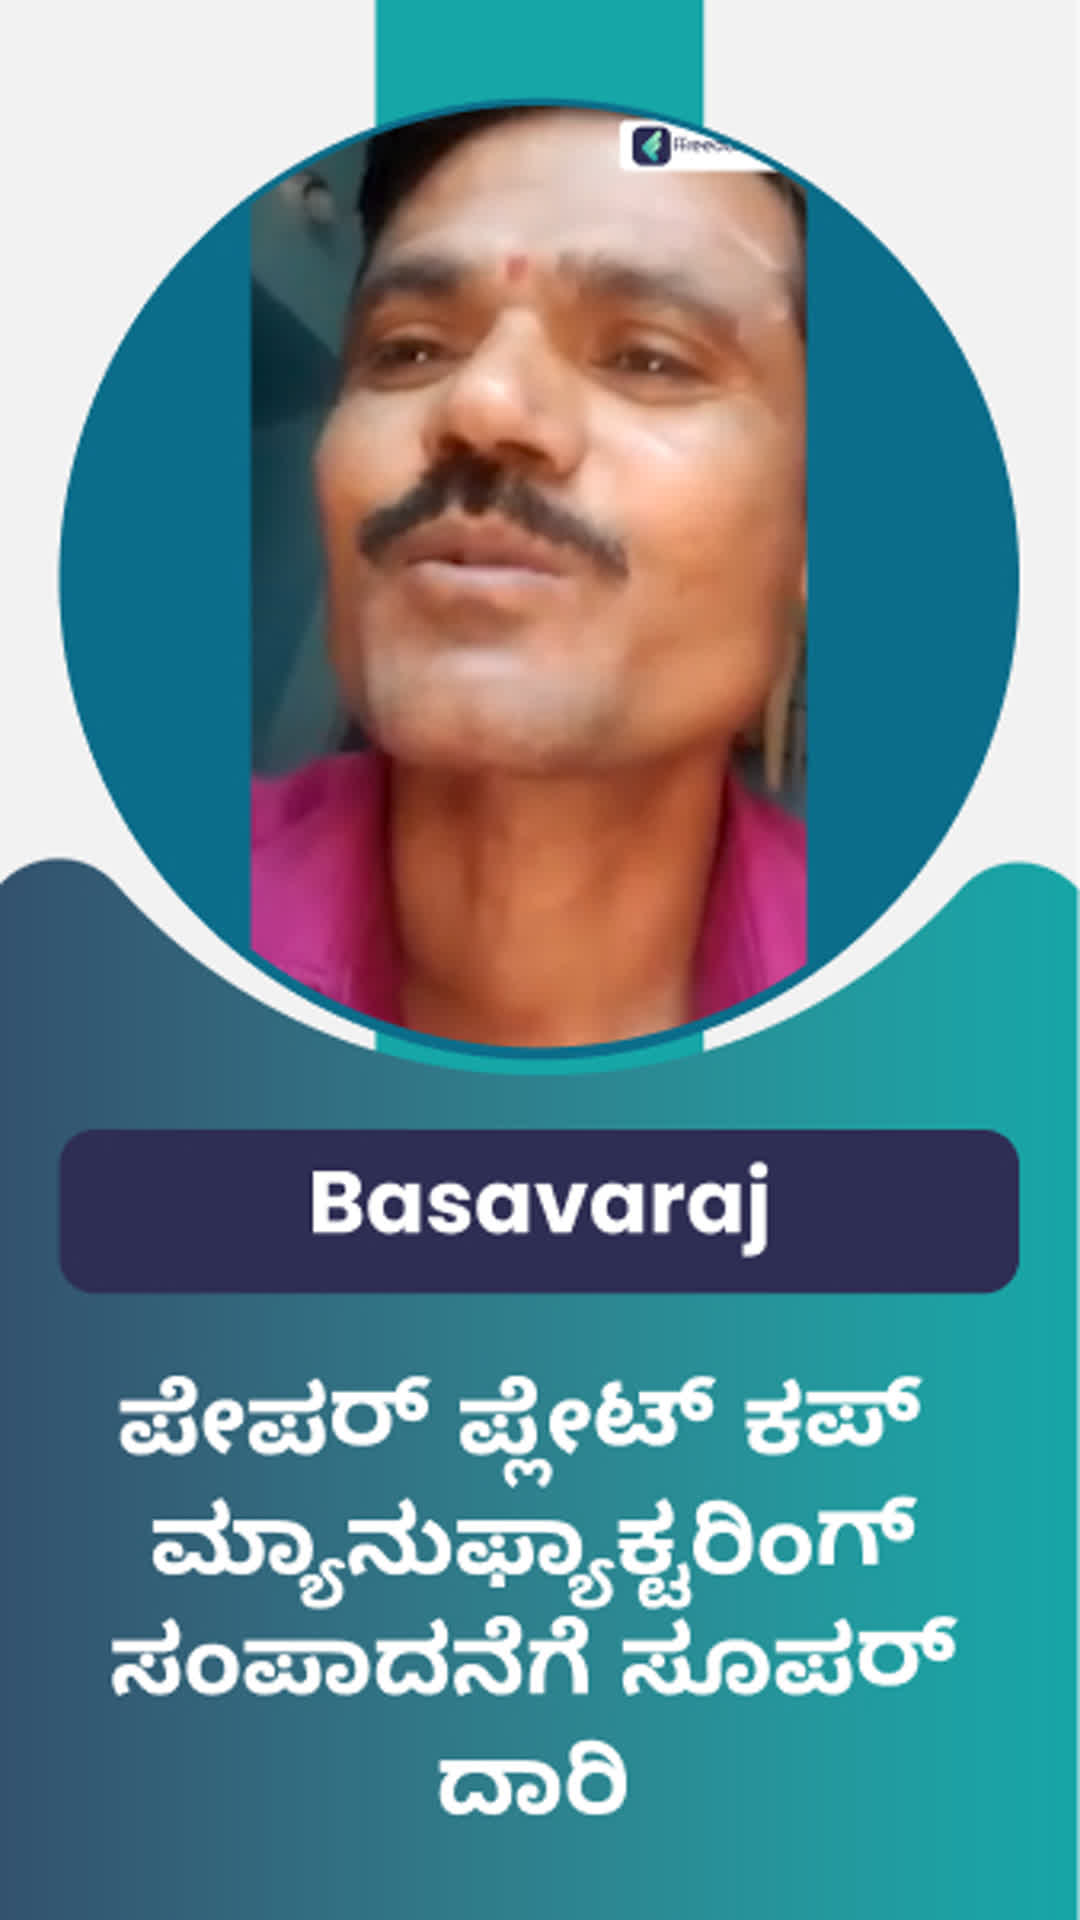 Basavaraja hadimani's Honest Review of ffreedom app - Kalaburagi ,Karnataka